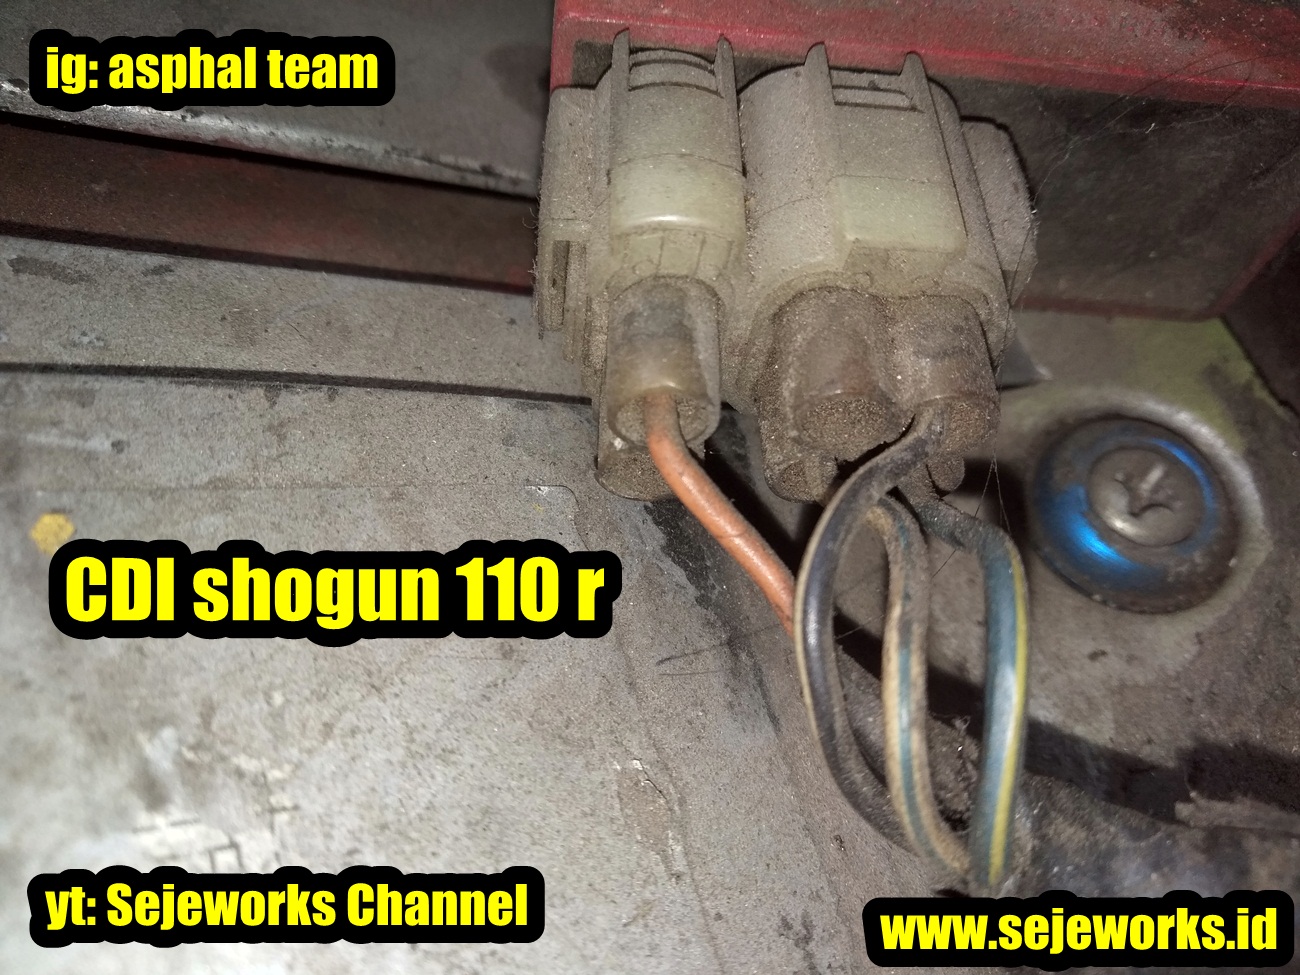 [DIAGRAM] Wiring Diagram Kelistrikan Shogun 110 FULL Version HD Quality